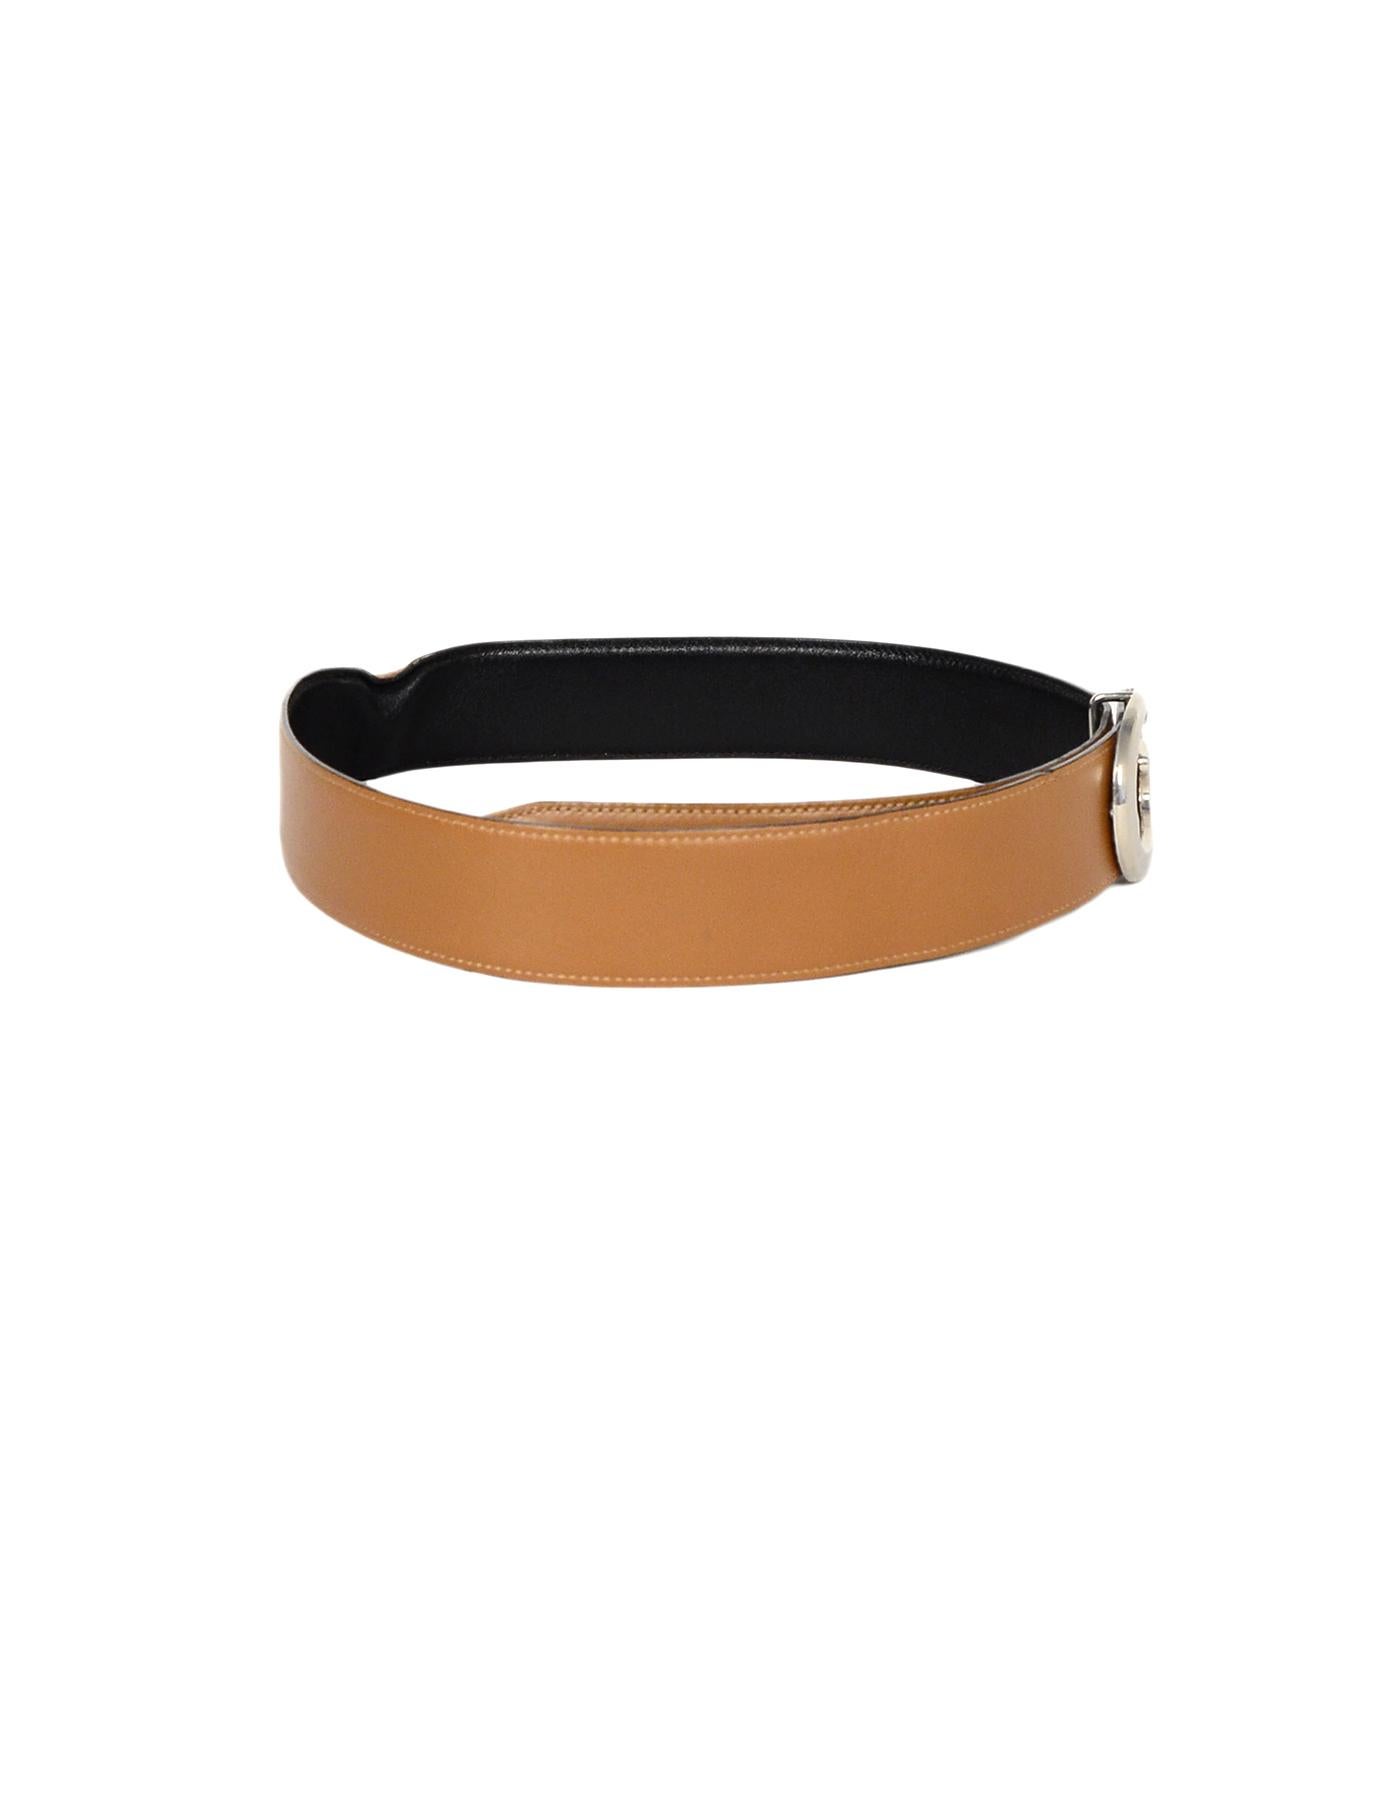 Gucci Black/Tan Reversible Leather Belt W/ G Buckle Sz 65/26 2